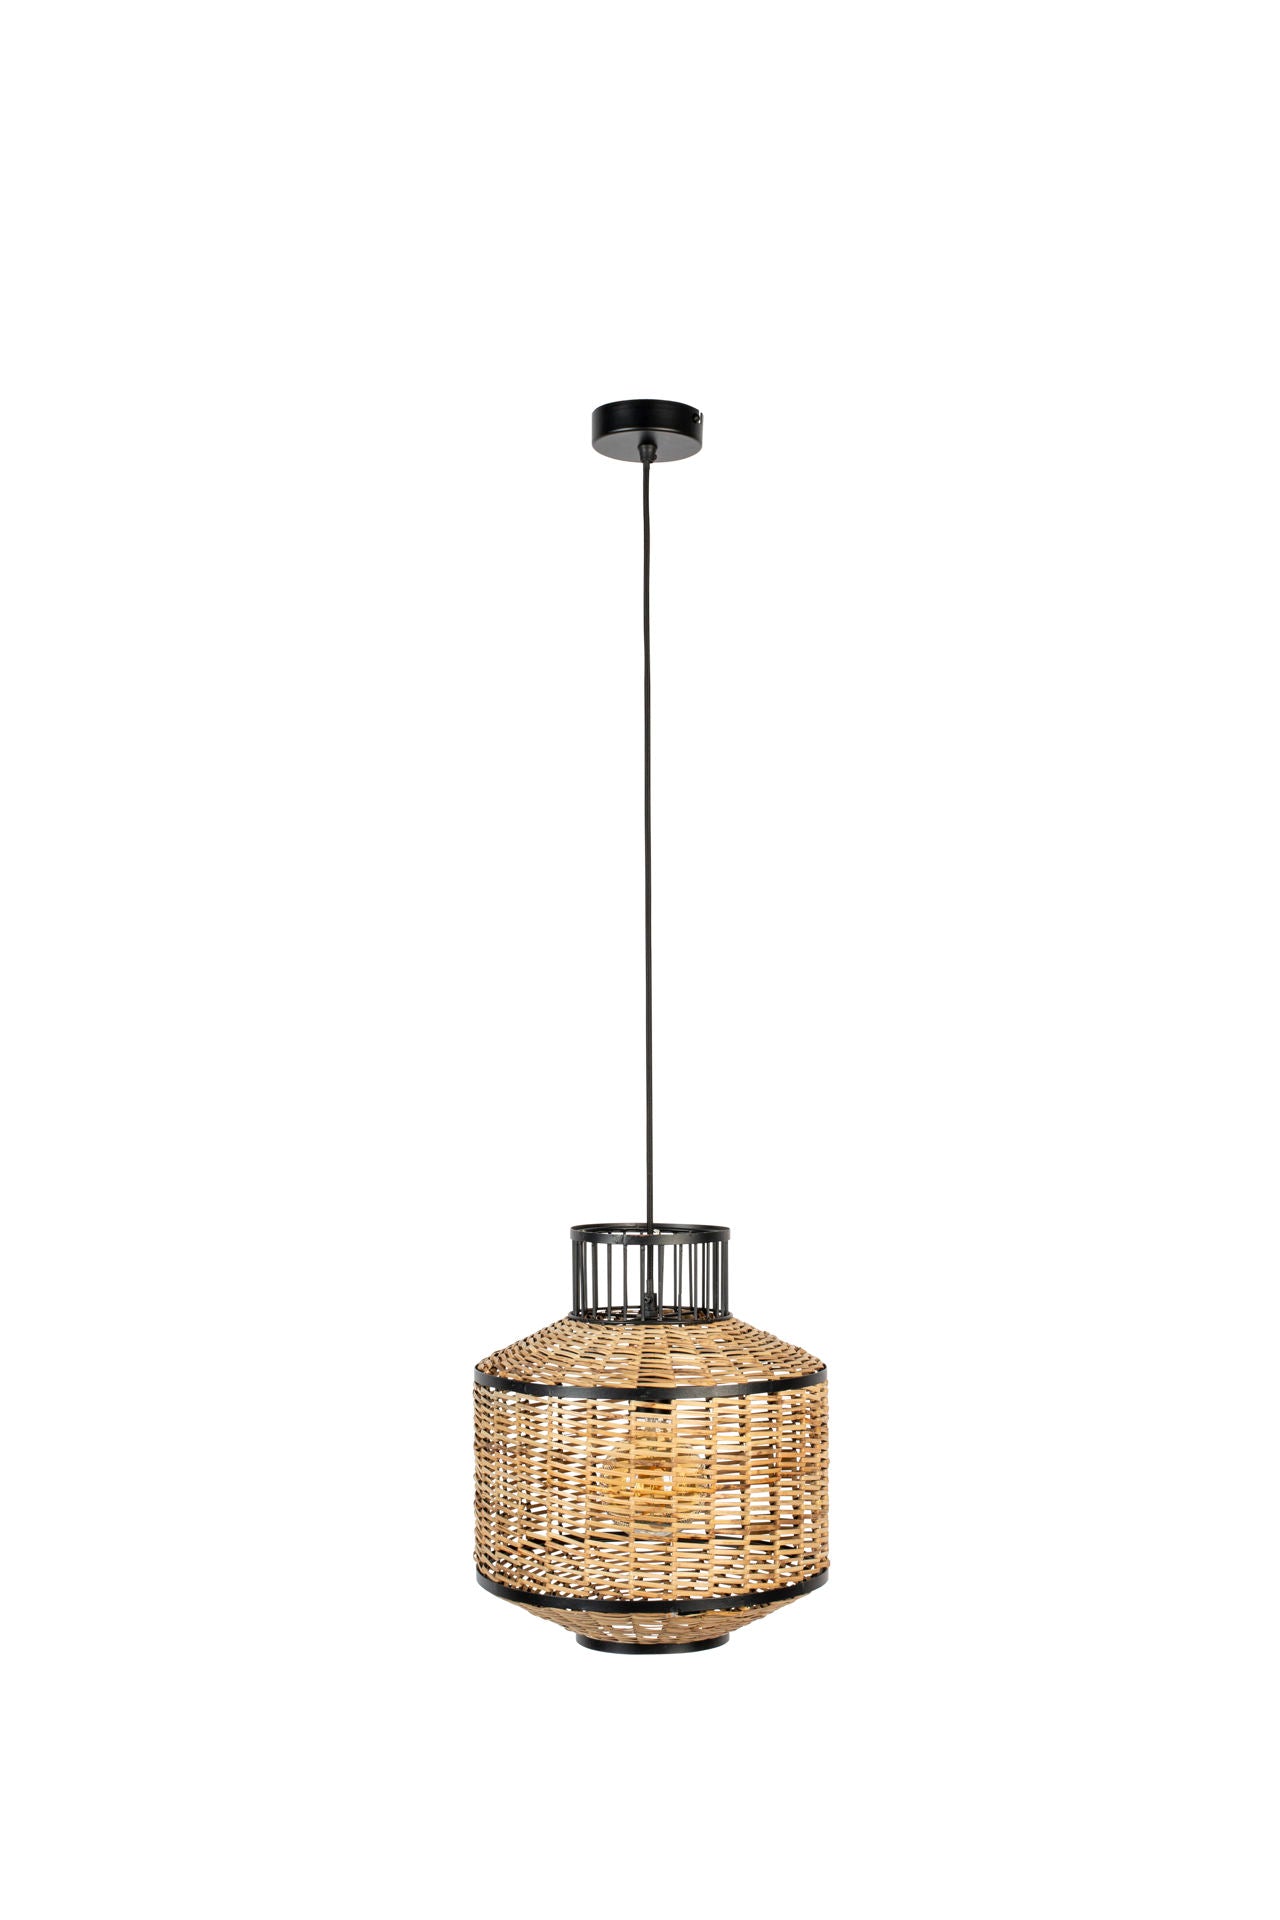 Nancy's Collegedale Hanging Lamp - Modern - Black, Natural, Brown - Steel, Wicker, PVC - 30 cm x 30 cm x 145 cm